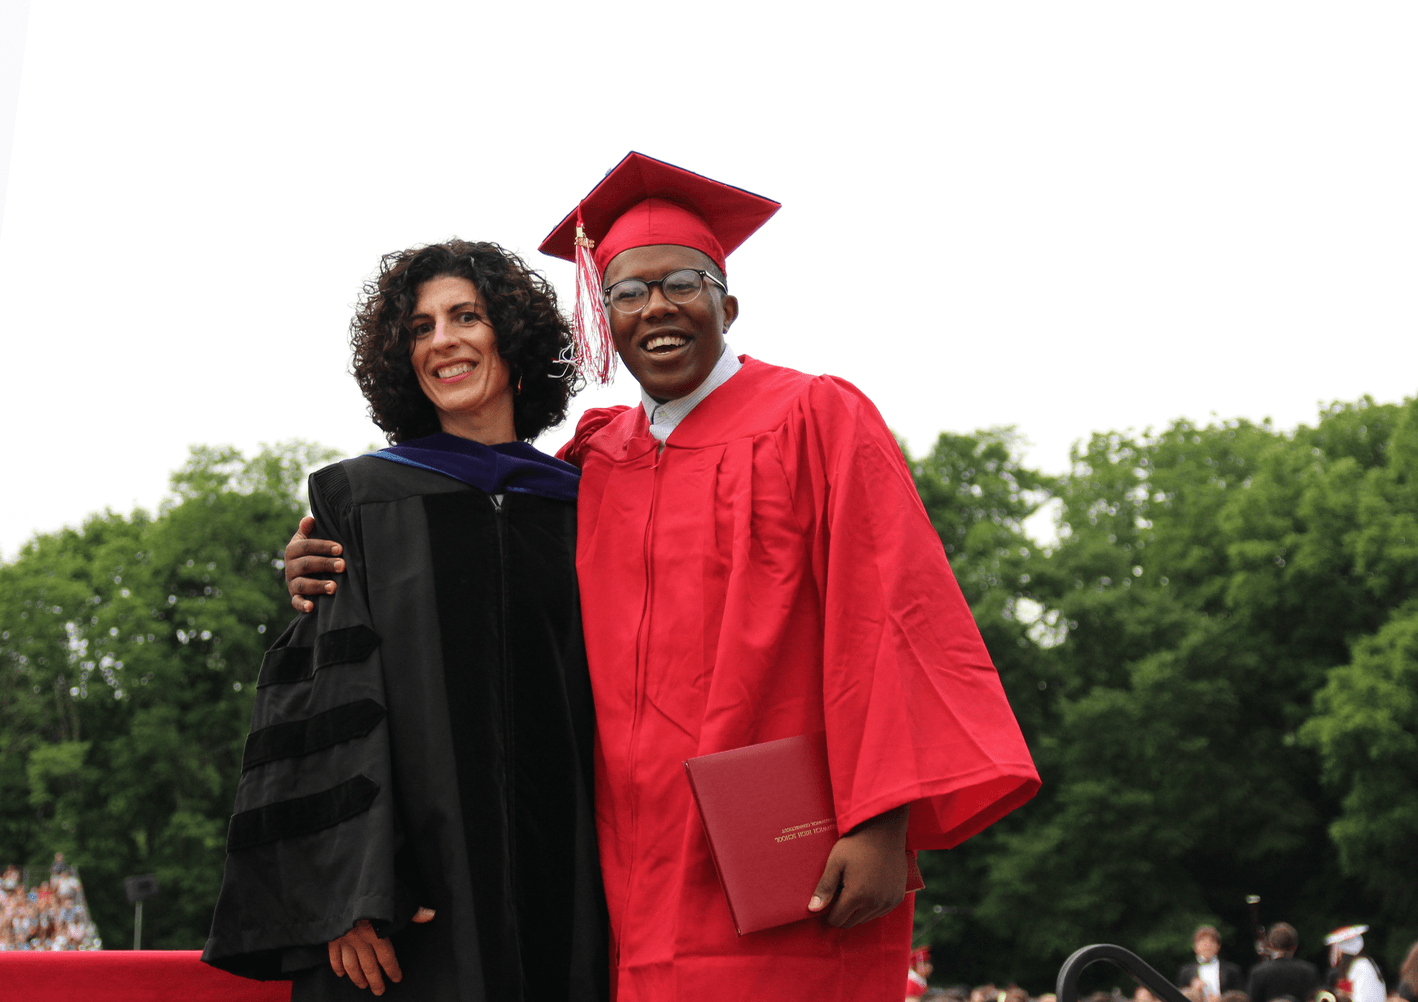 Greenwich High School graduation. June 20, 2018 Photo: Leslie Yager